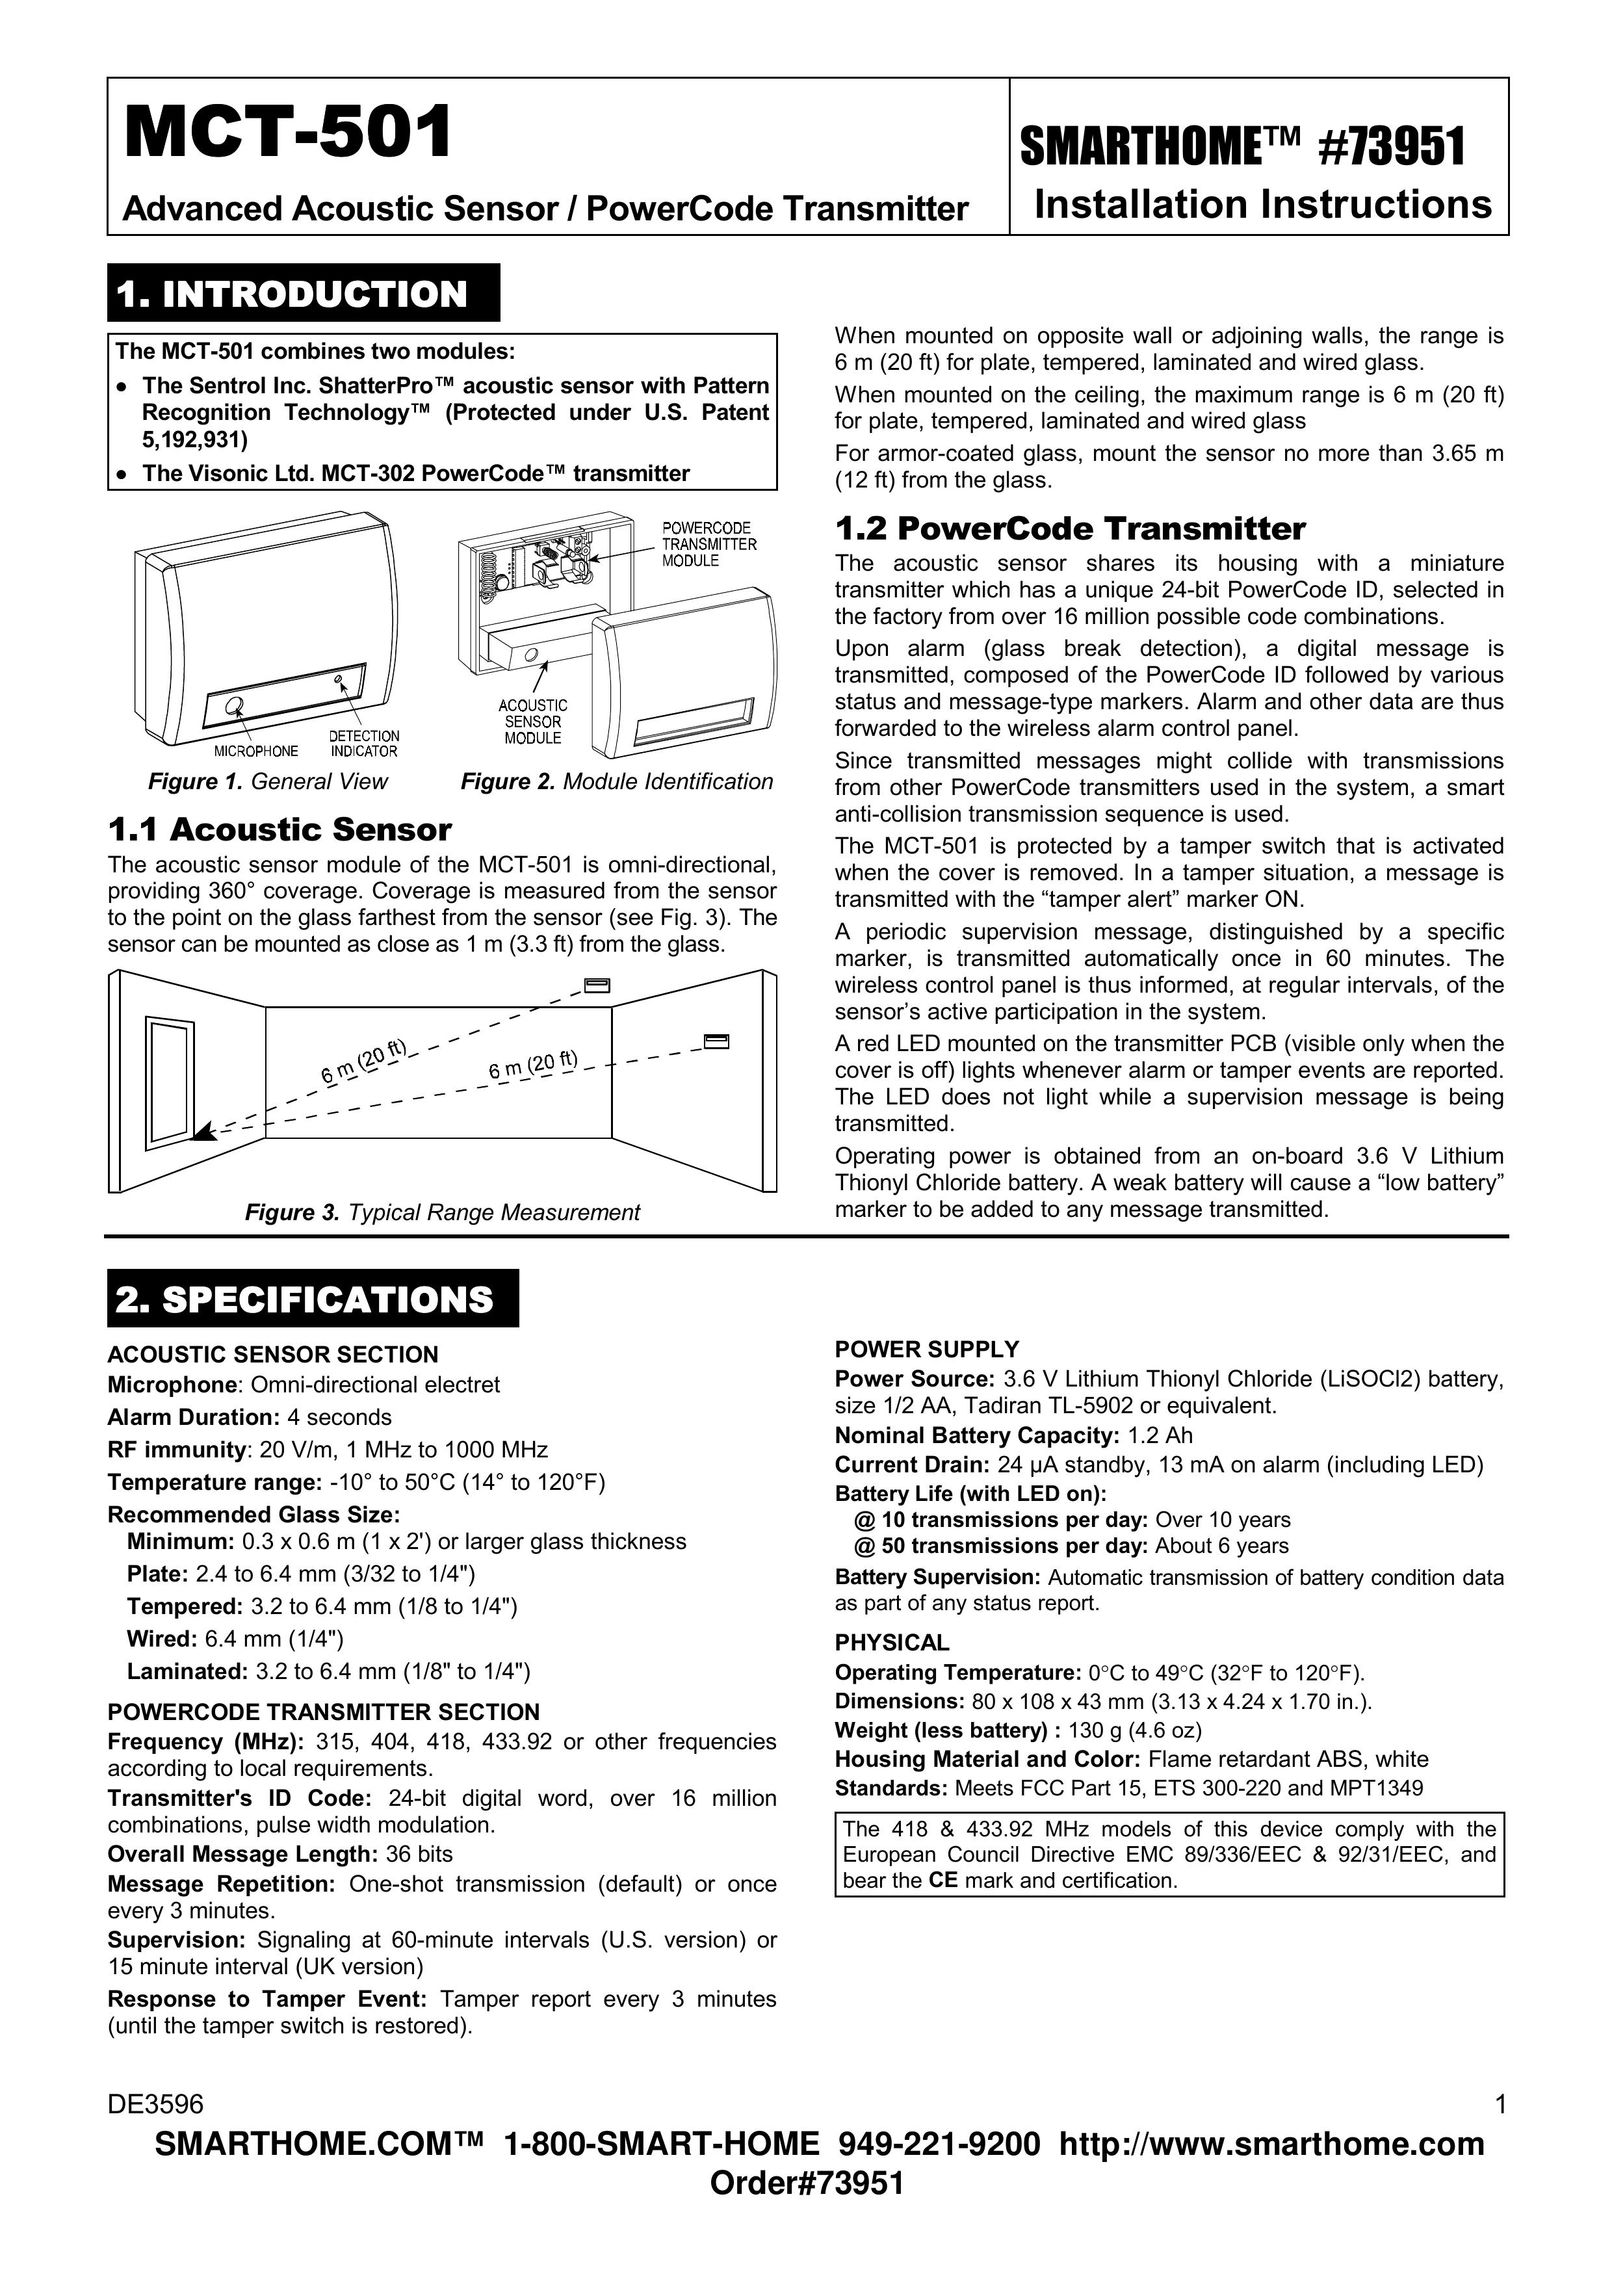 Visonik MCT-501 Home Security System User Manual